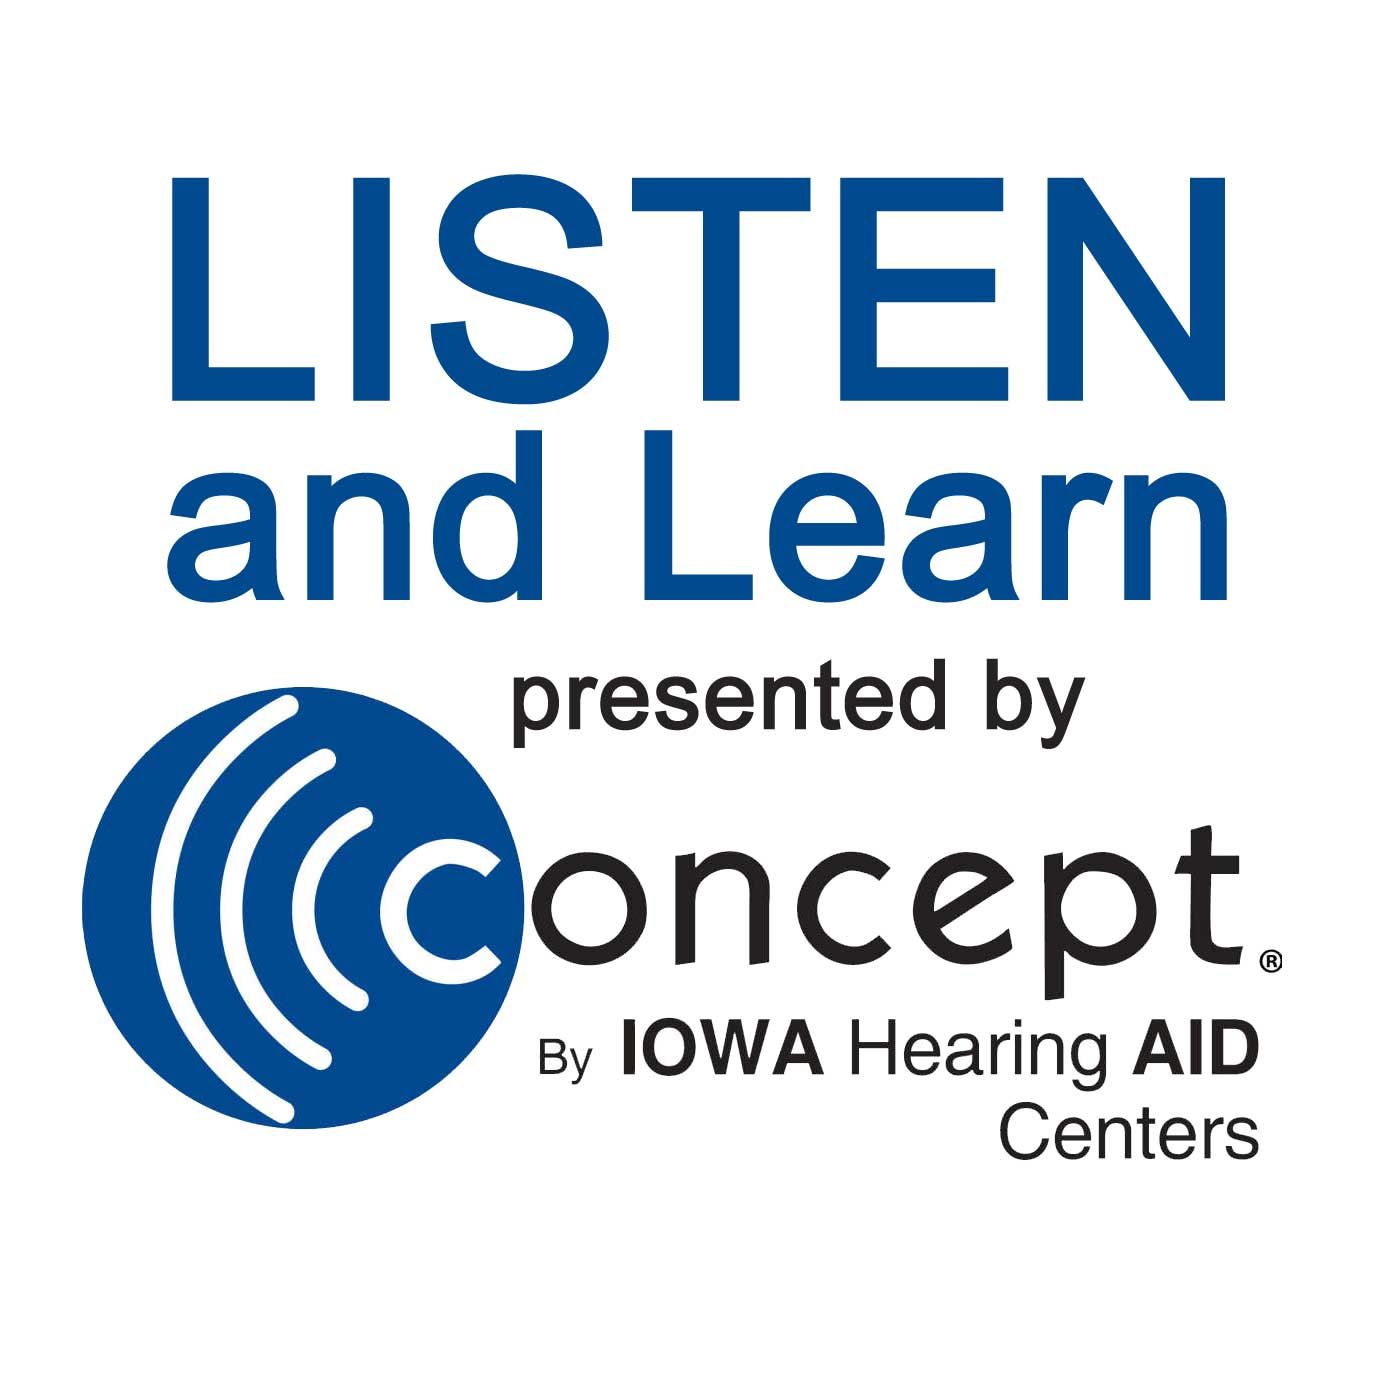 Rate Of Hearing Loss Is Increasing